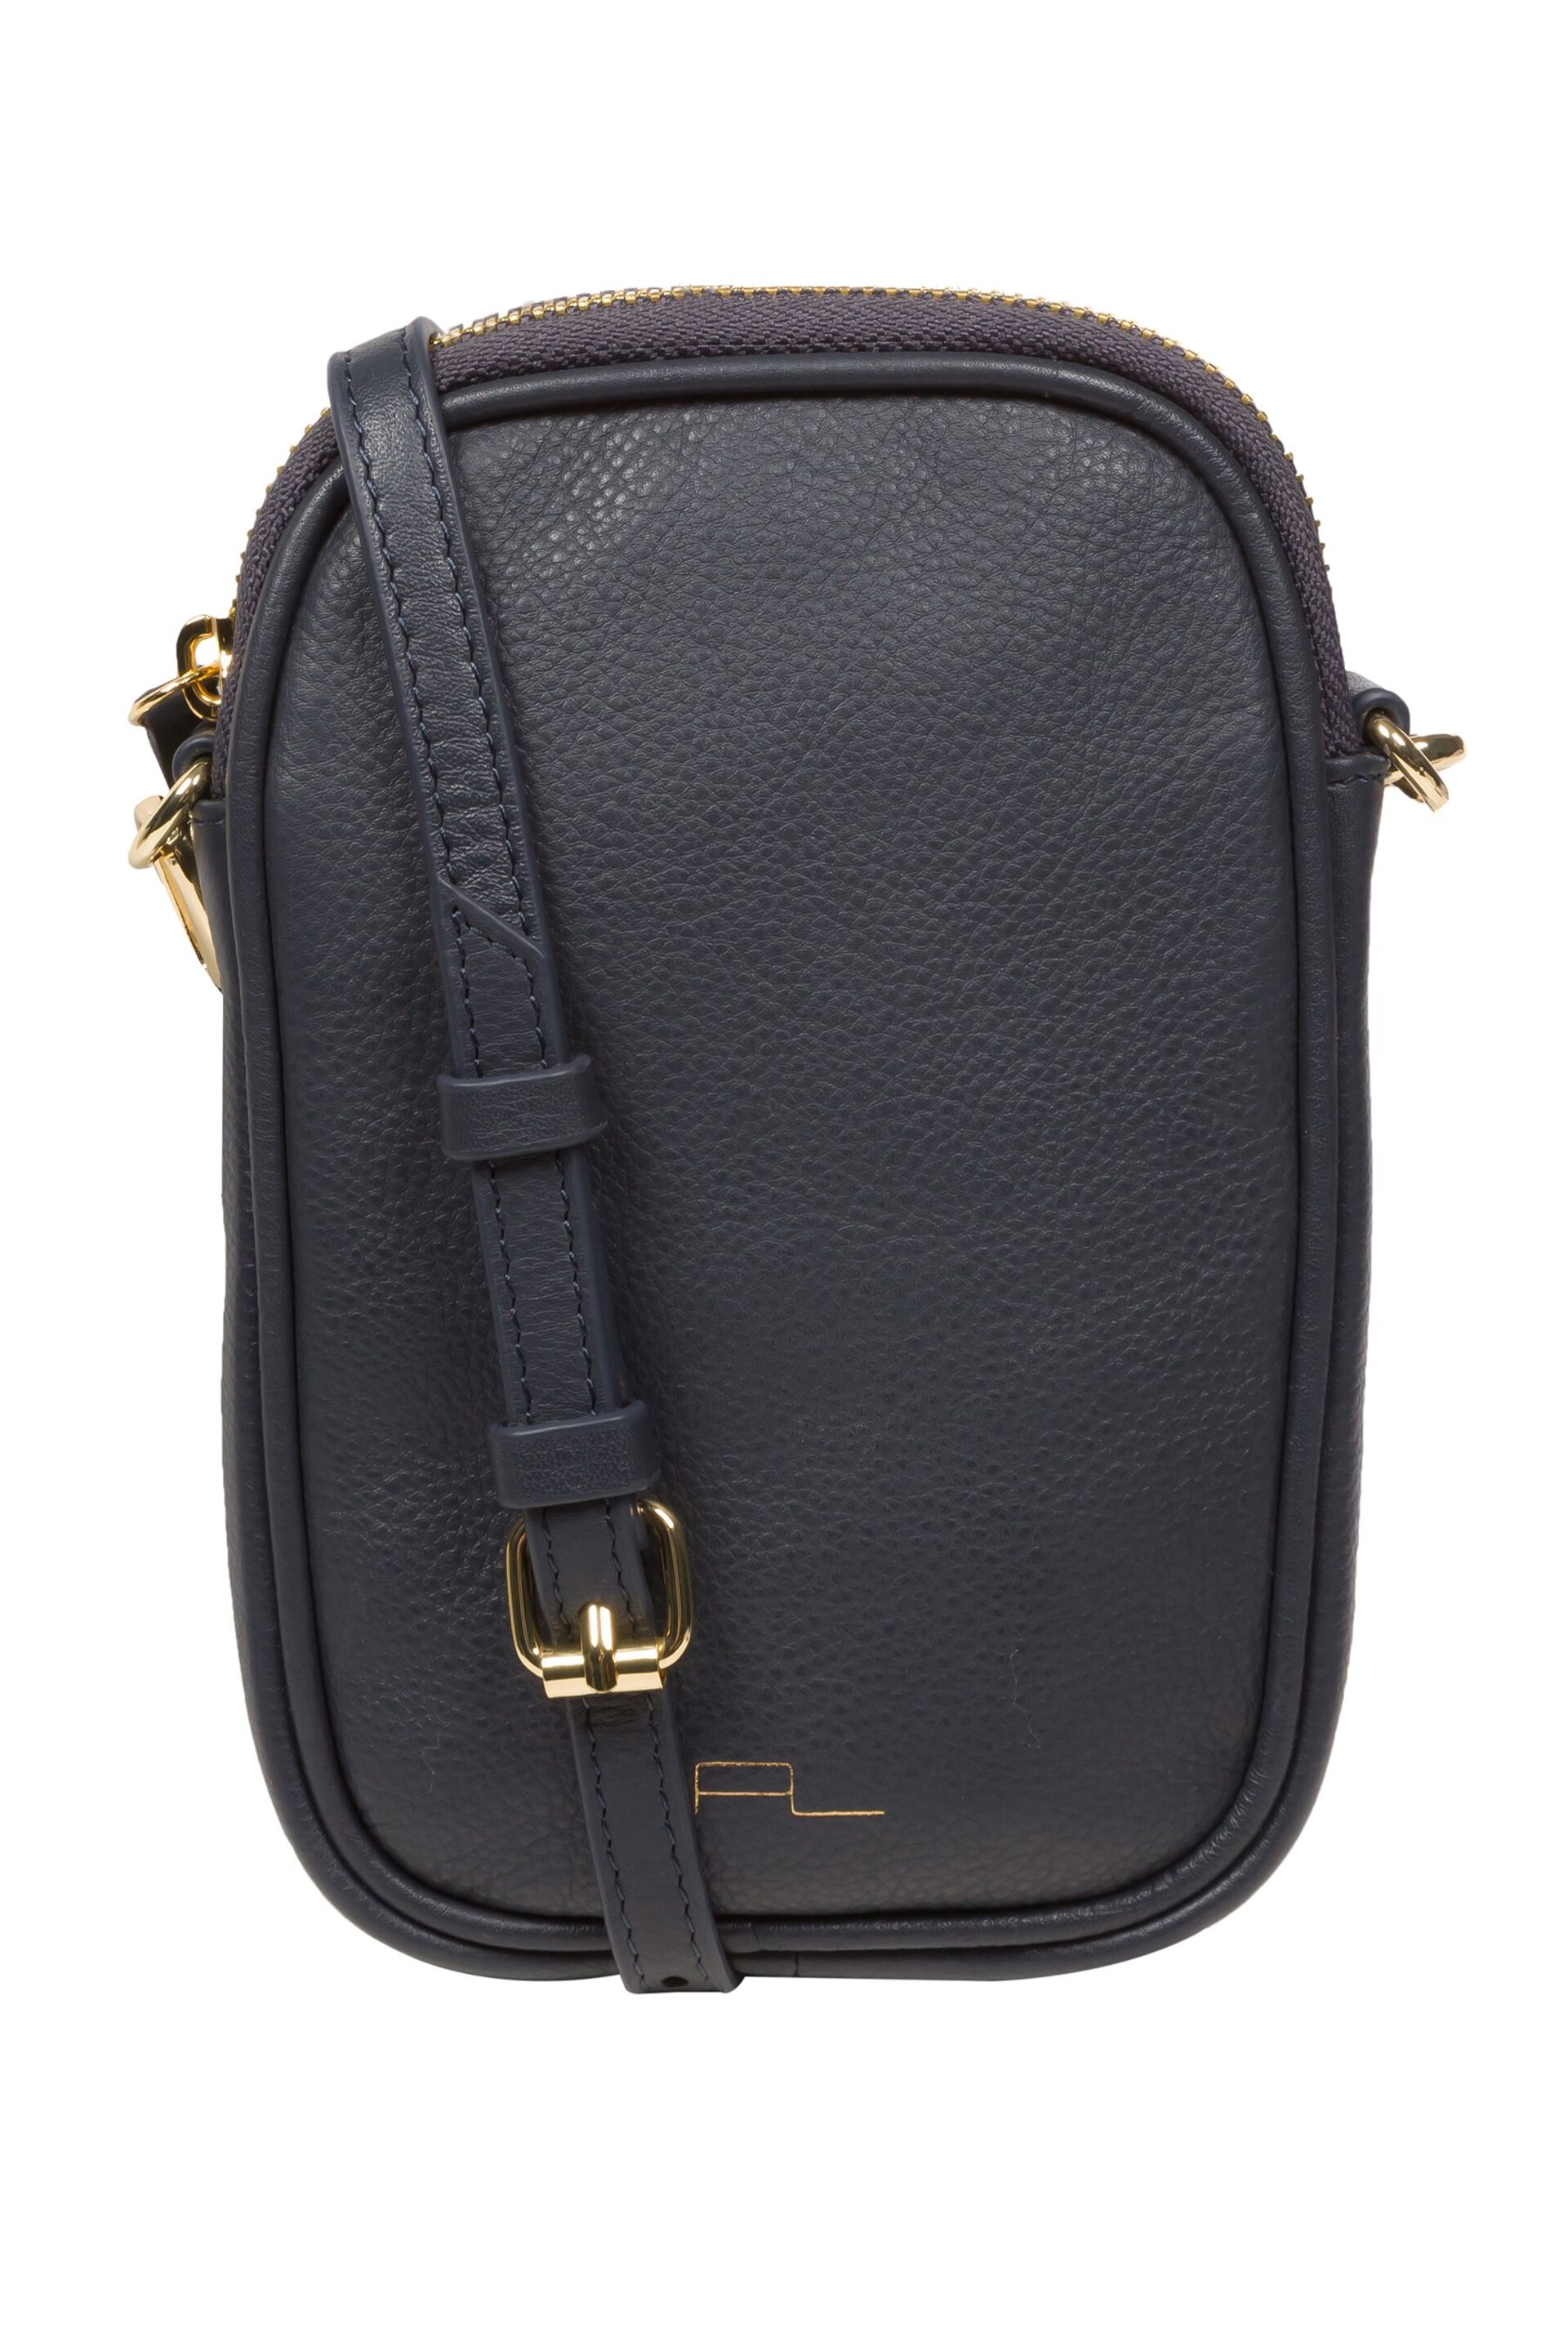 Pure Luxuries London Alaina Nappa Leather Cross-Body Phone Bag - Image 1 of 5